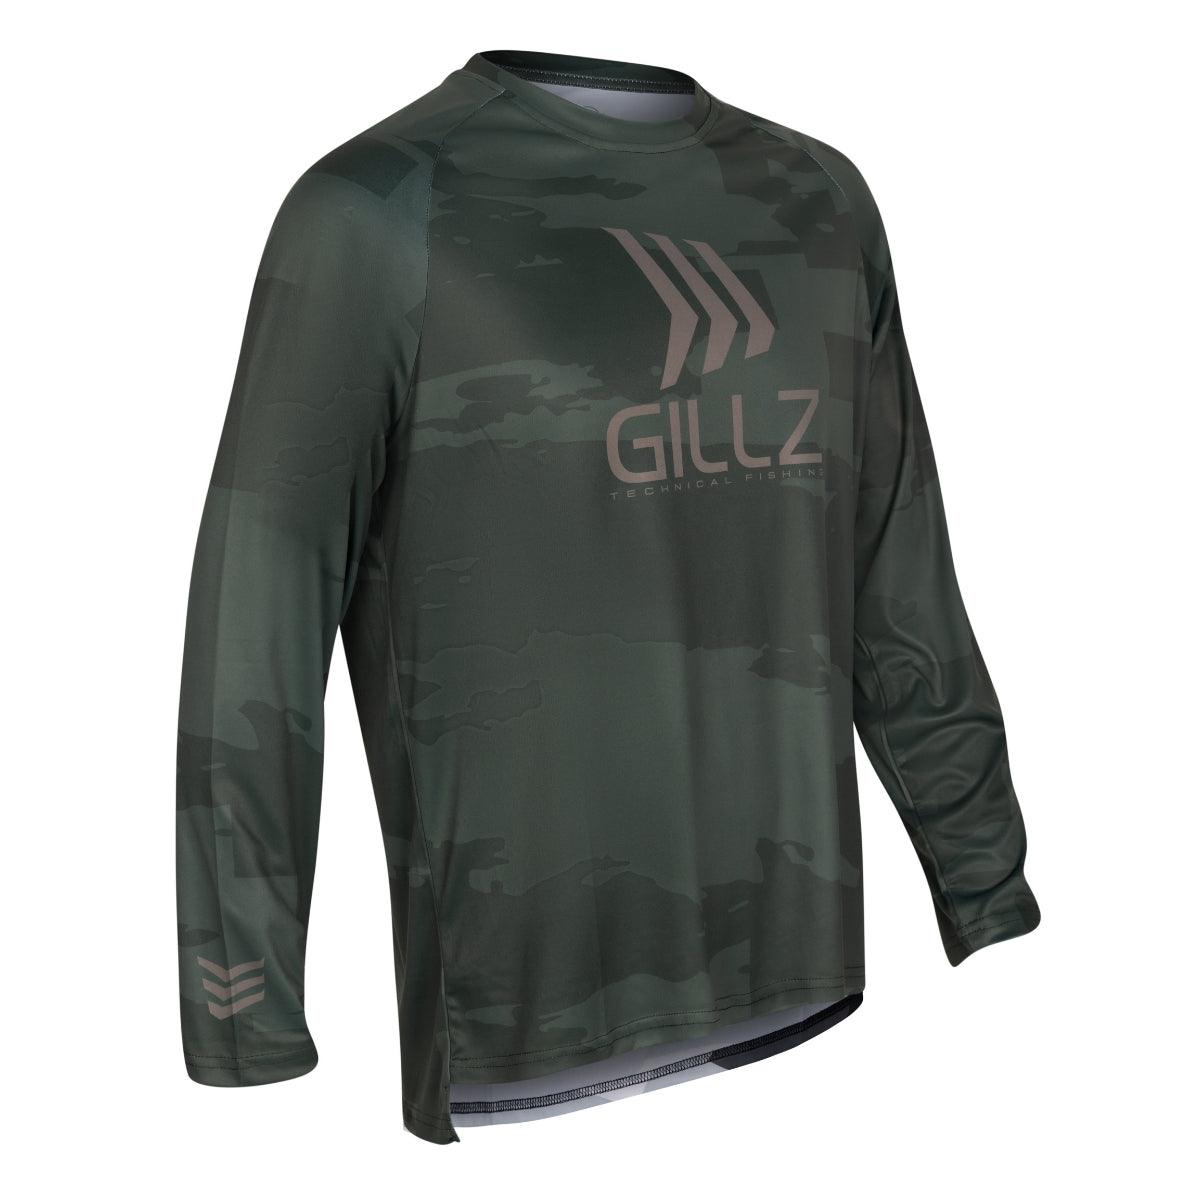 GILLZ Fishing Clothing Long Sleeve Jersey Men Tops Gear Outdoor